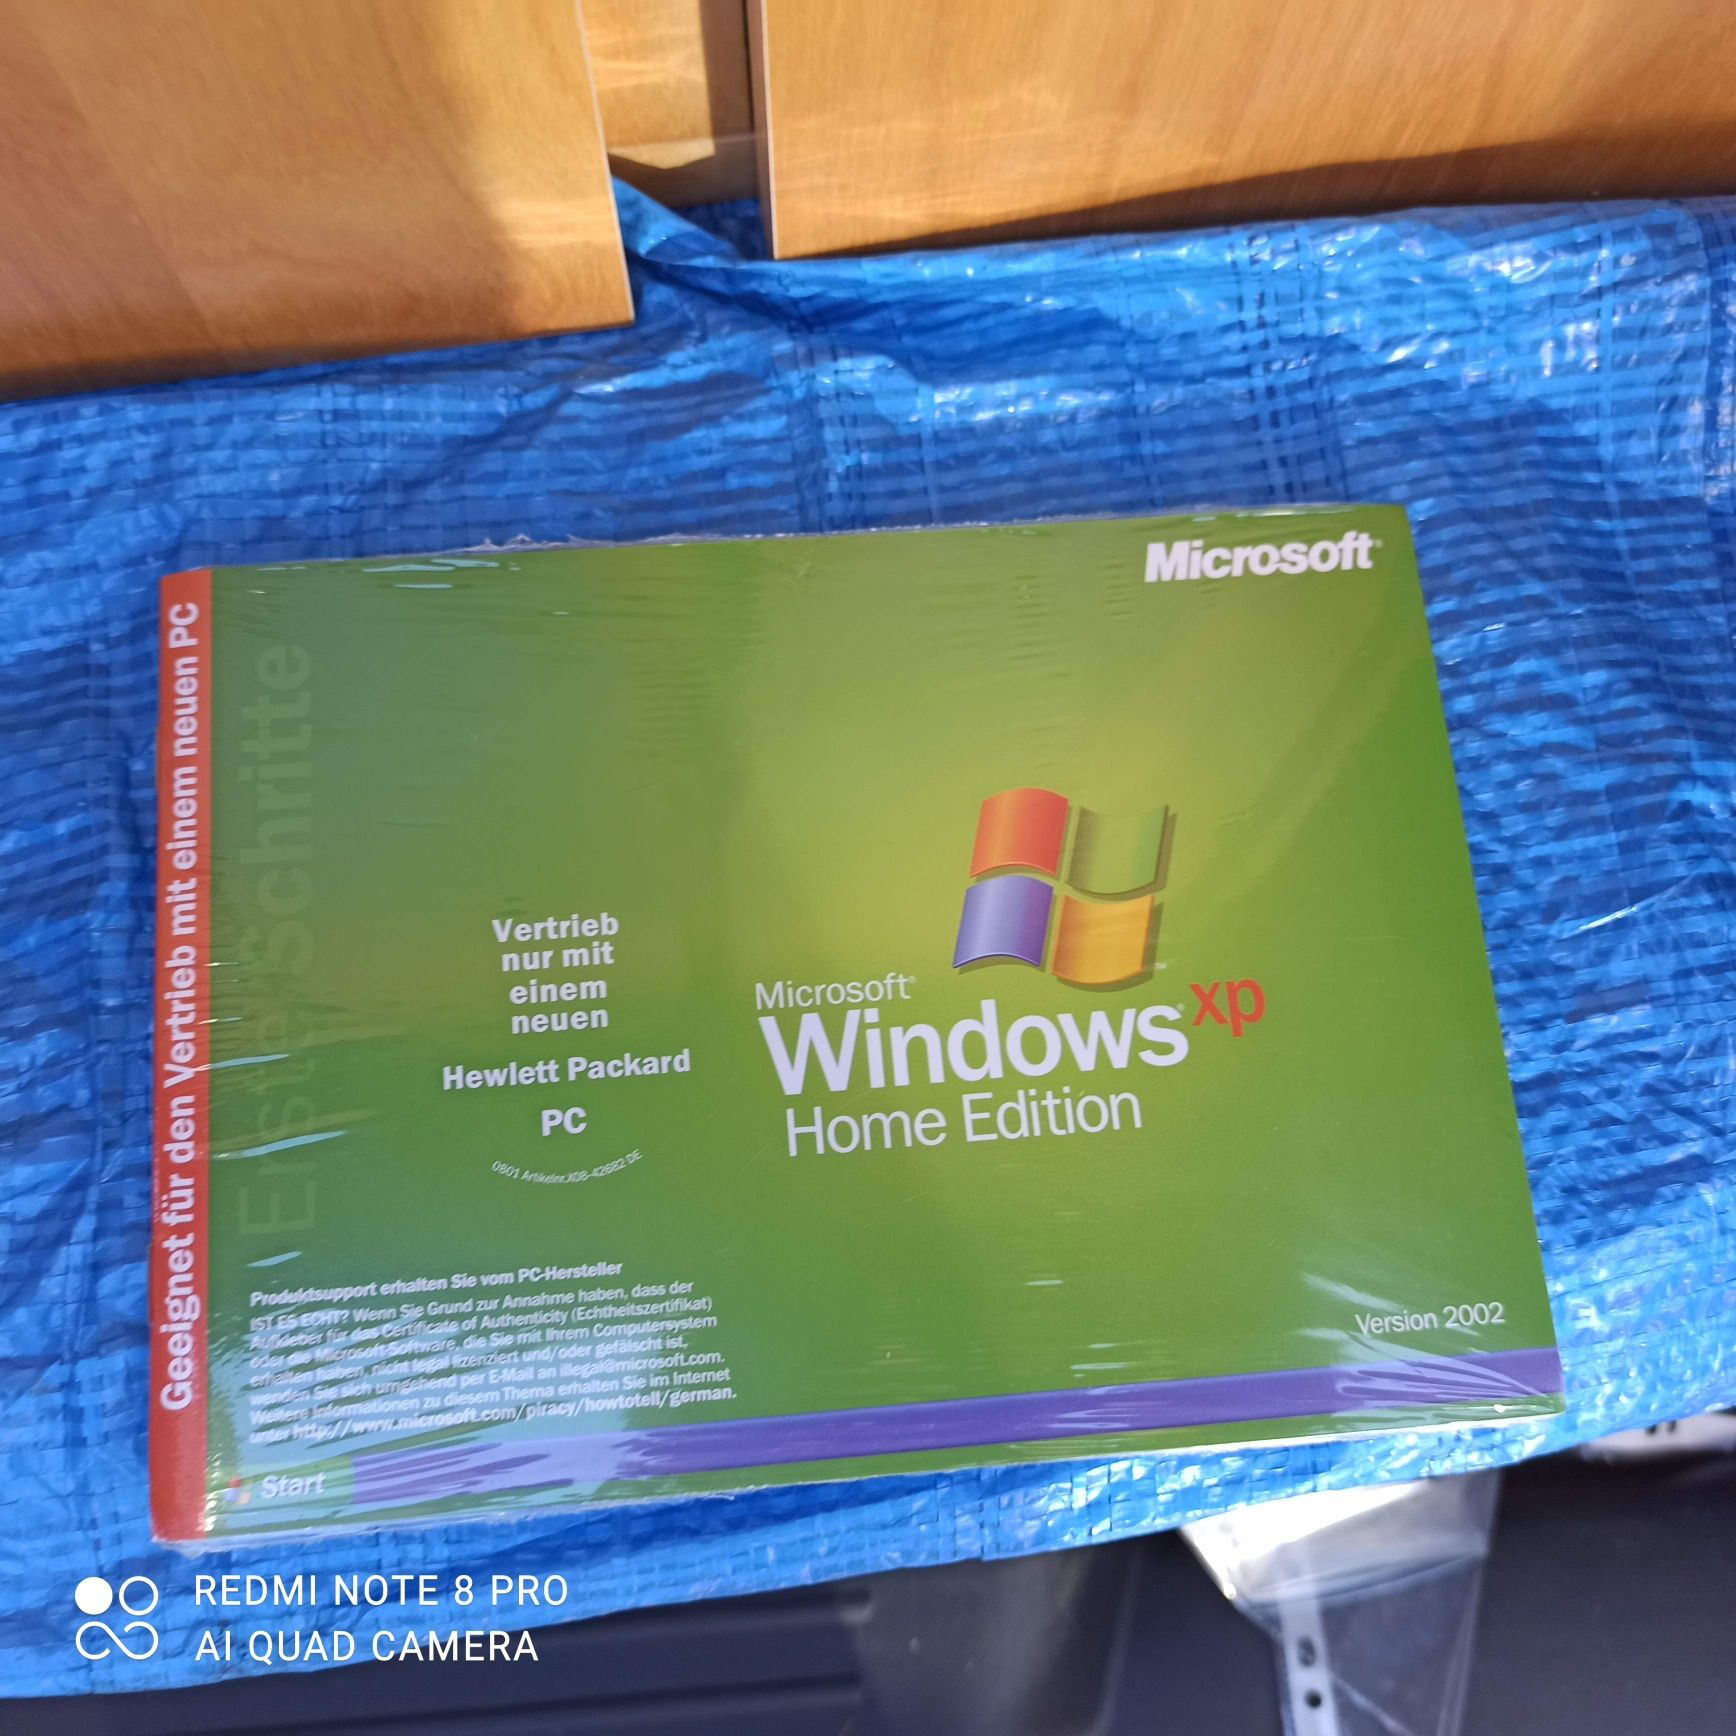 Windows XP home edition HP version 2002